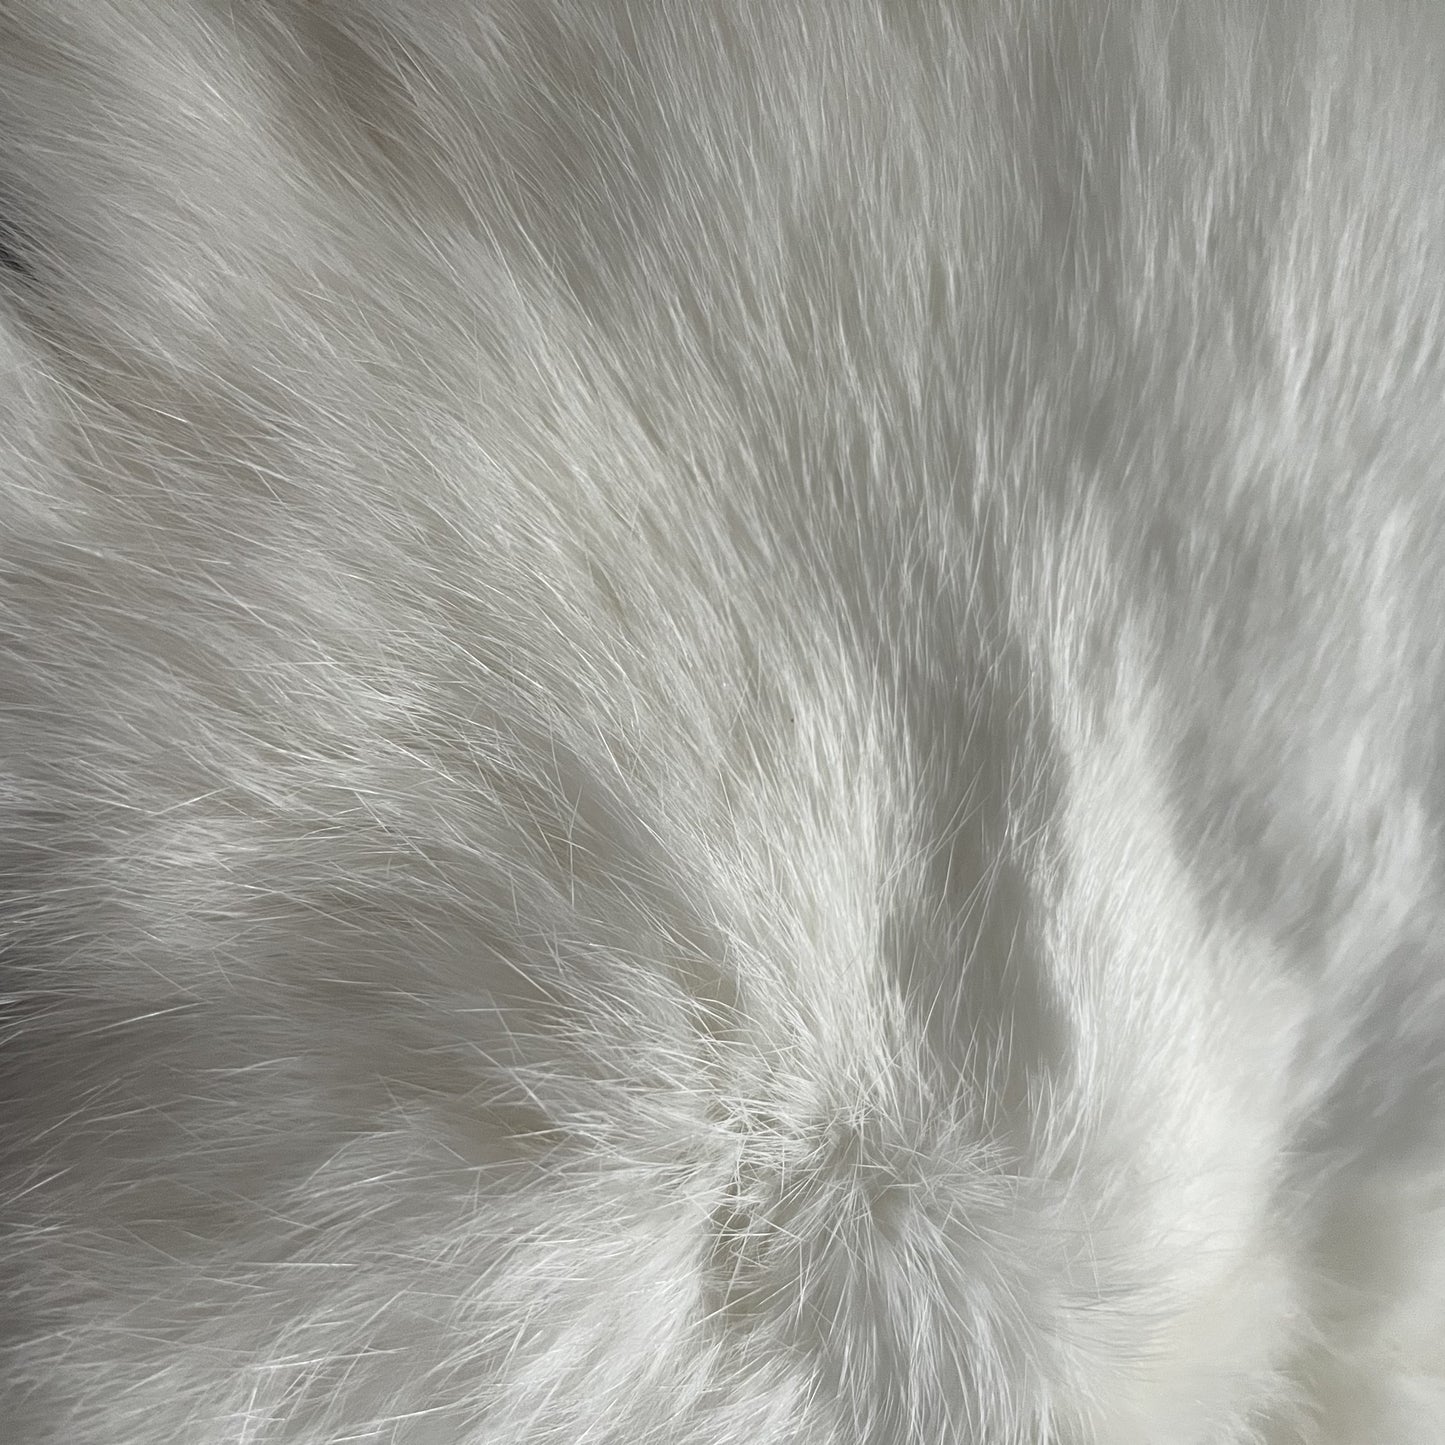 Fourrure de Lapin blanche / White rabbit fur